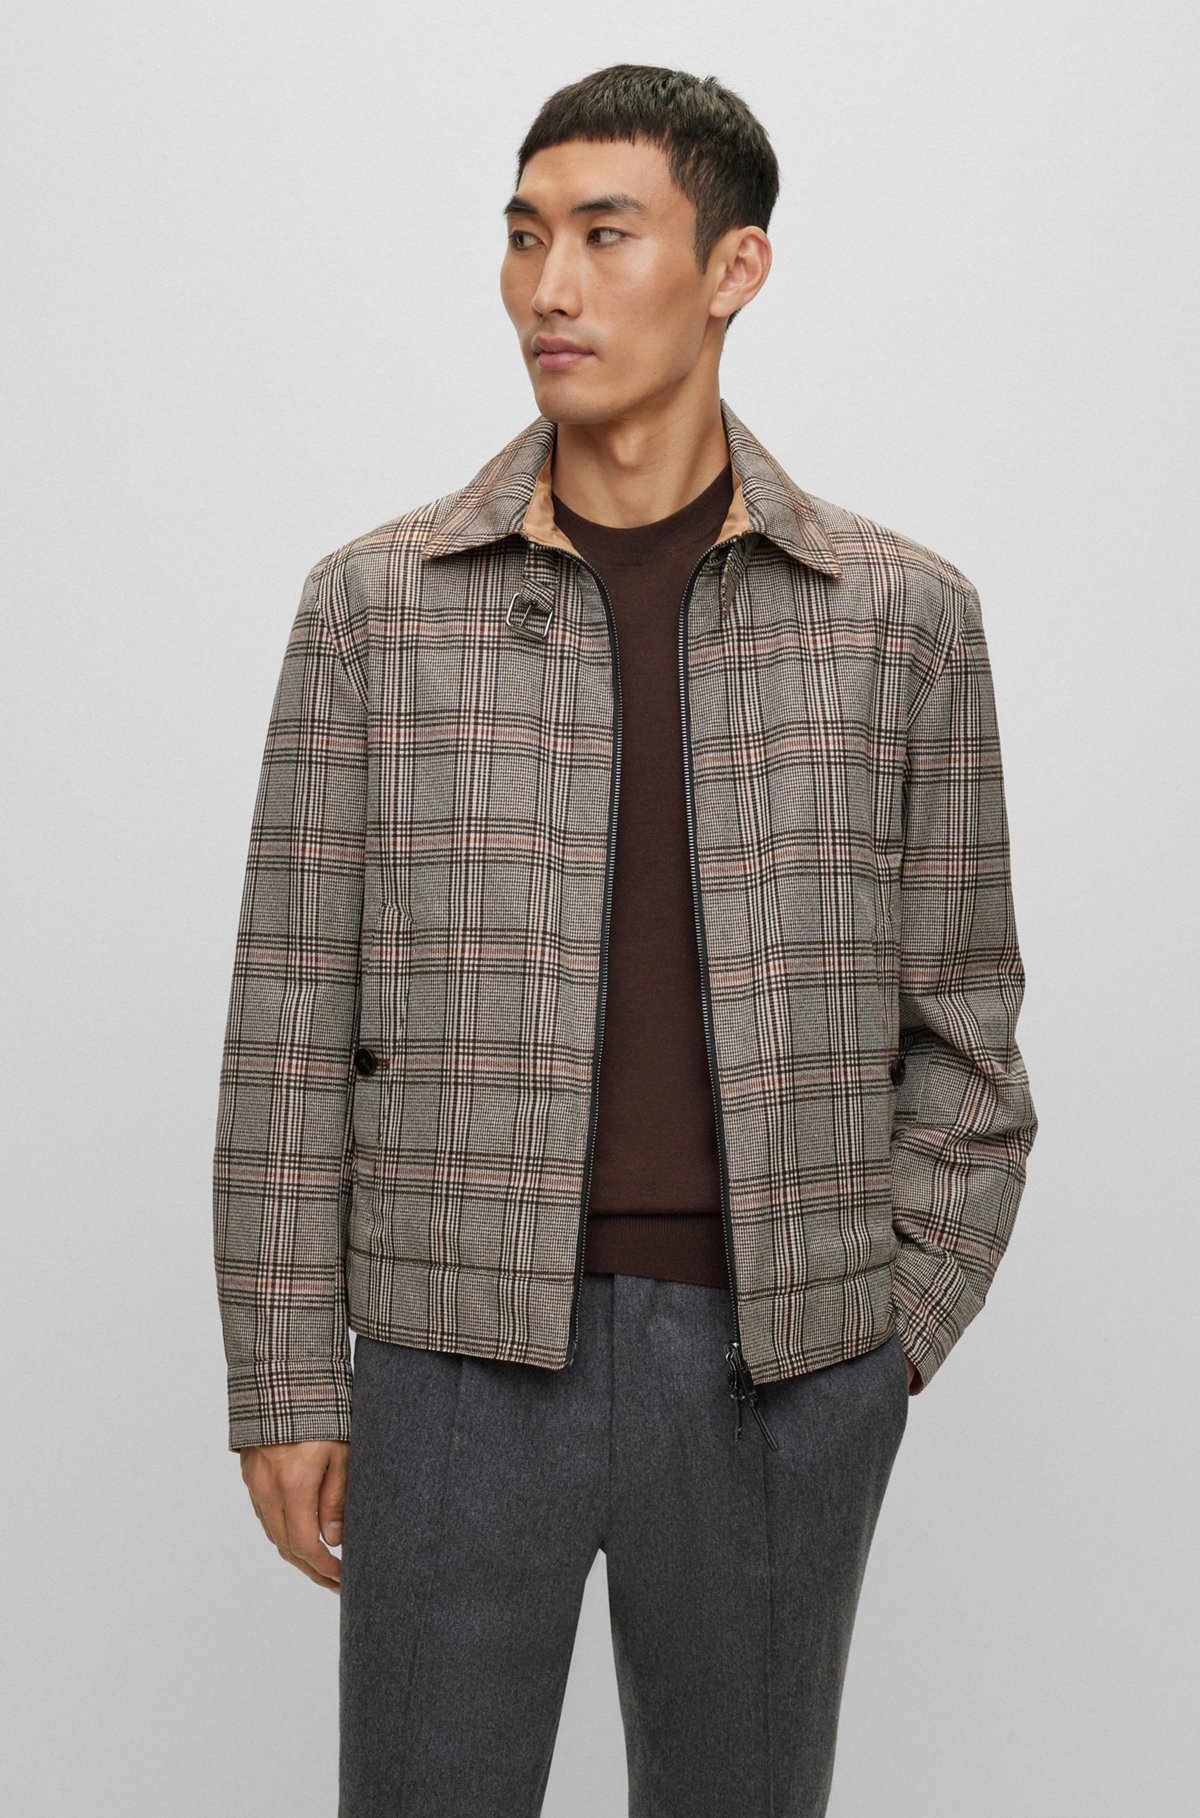 Hugo Boss Blouson Style Jacket $626